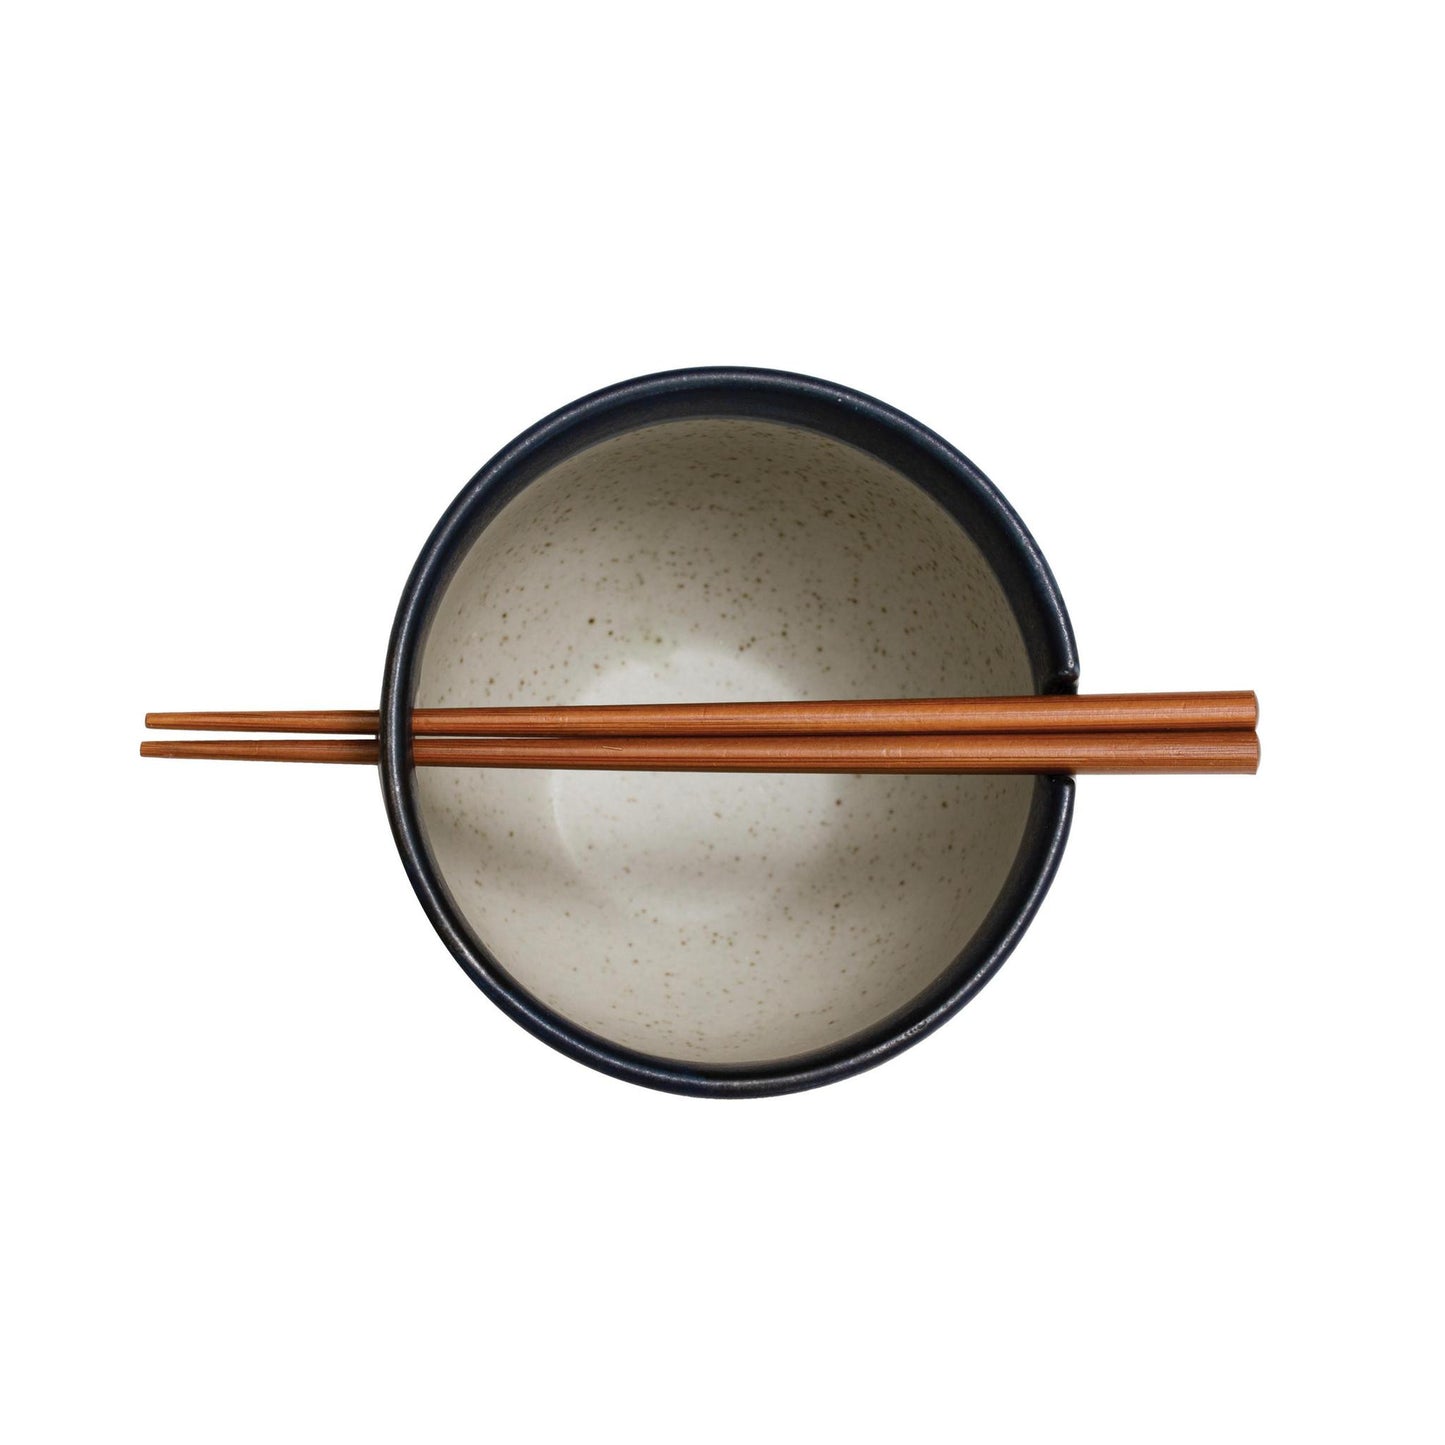 Polka Dot Stoneware Bowl with Chopsticks